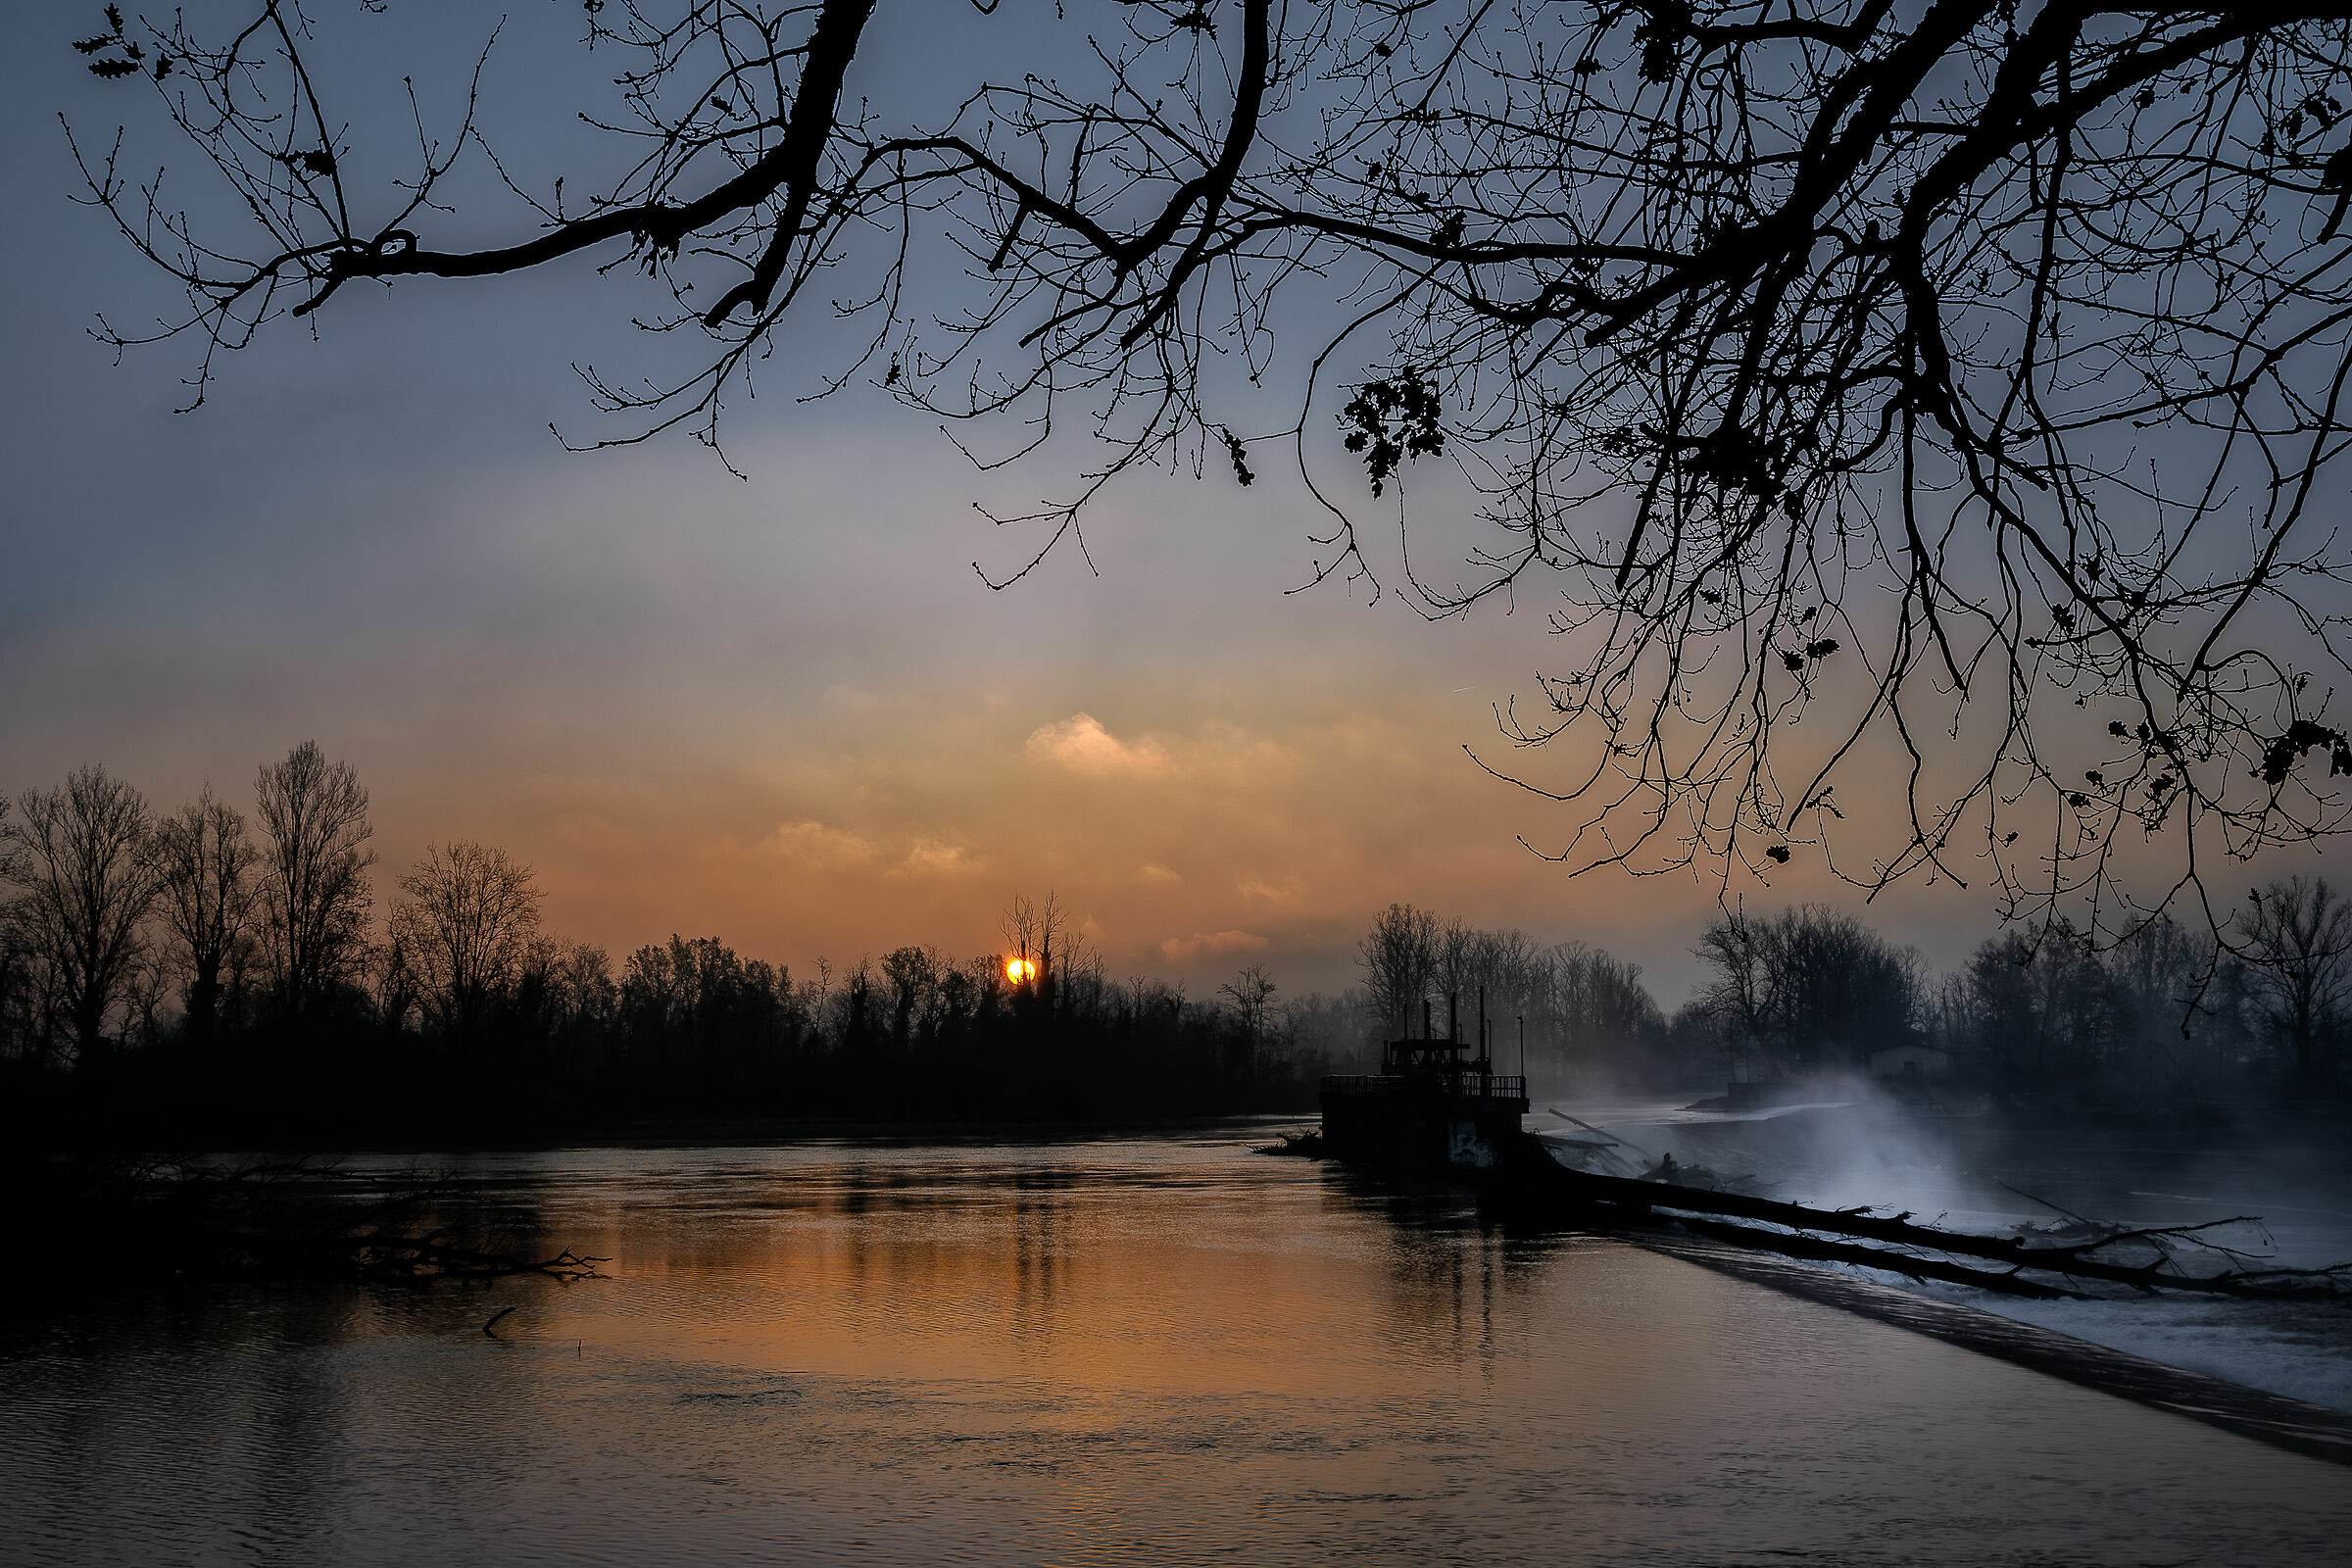 Sunrise on the Adda River...